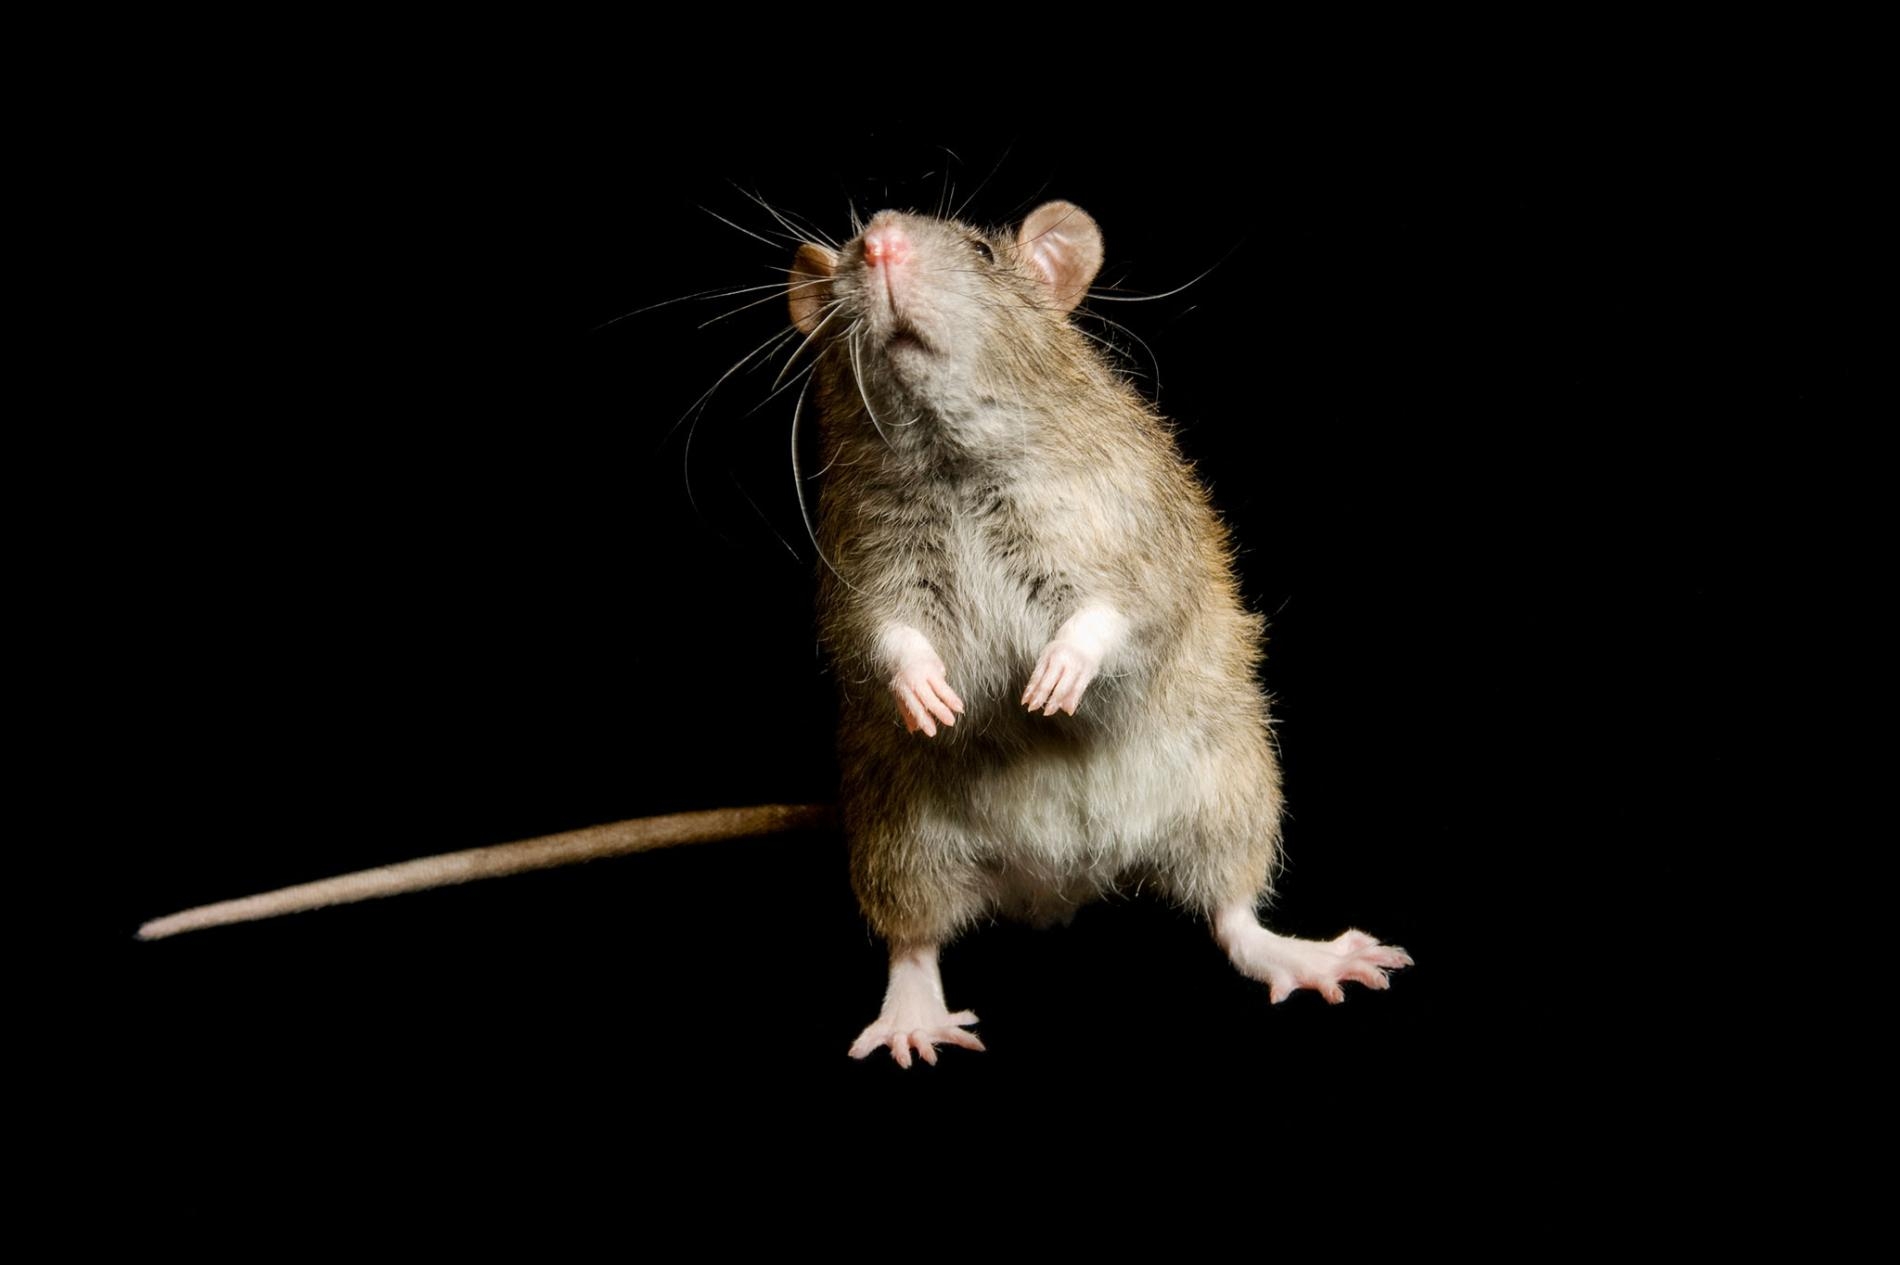 喬治米克施薩頓鳥類研究中心（George M. Sutton Avian Research Center）裡的一隻家鼠（Rattus rattus）。PHOTOGRAPH BY JOEL SARTORE, NATIONAL GEOGRAPHIC PHOTO ARK